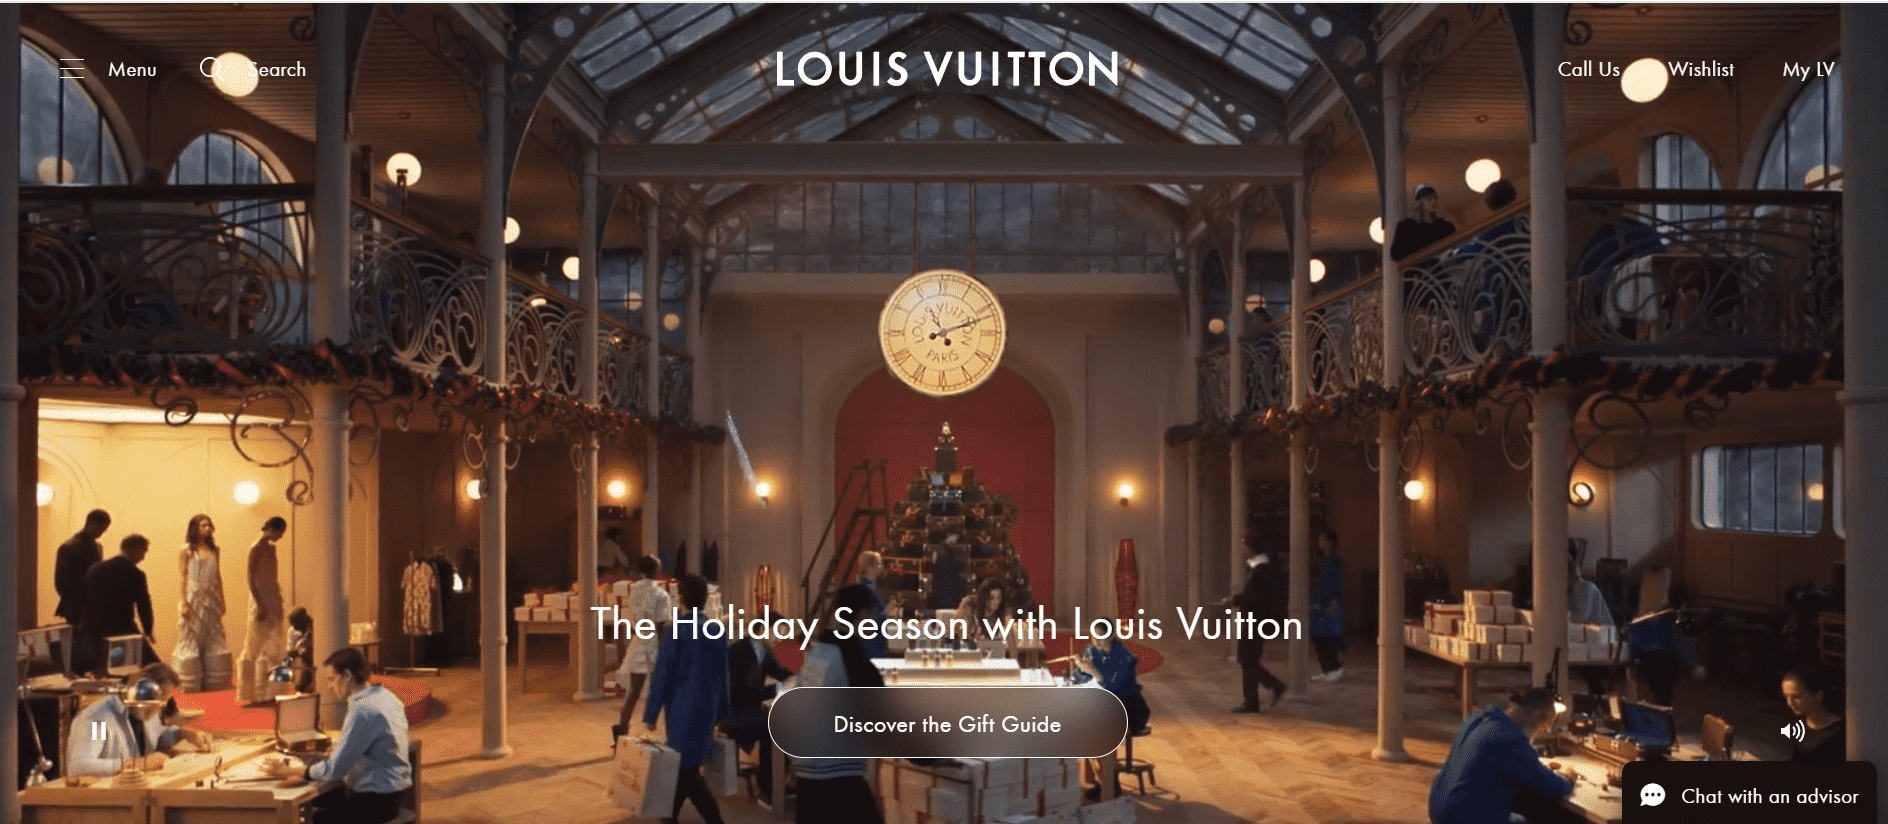 Louis Vitton website homepage